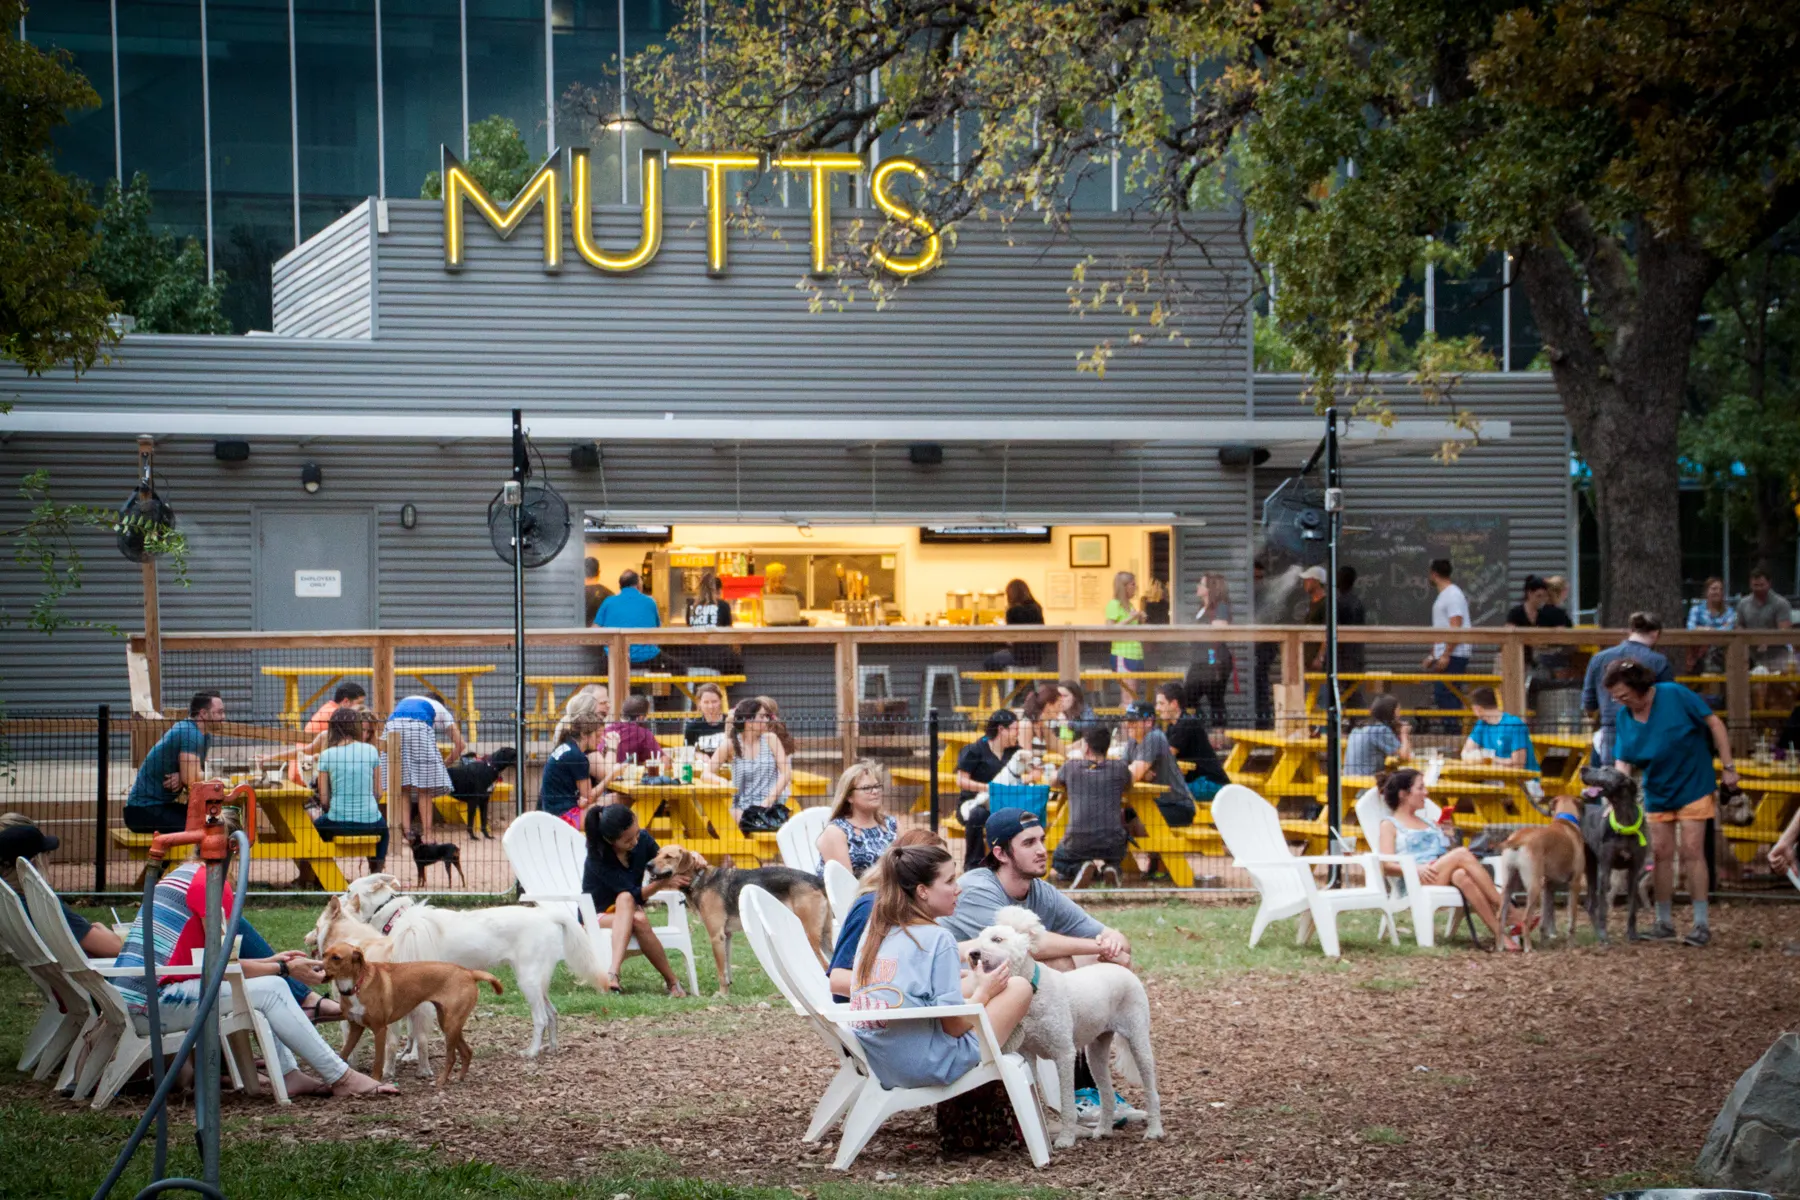 Roam: Mutts Cantina in Dallas, Texas